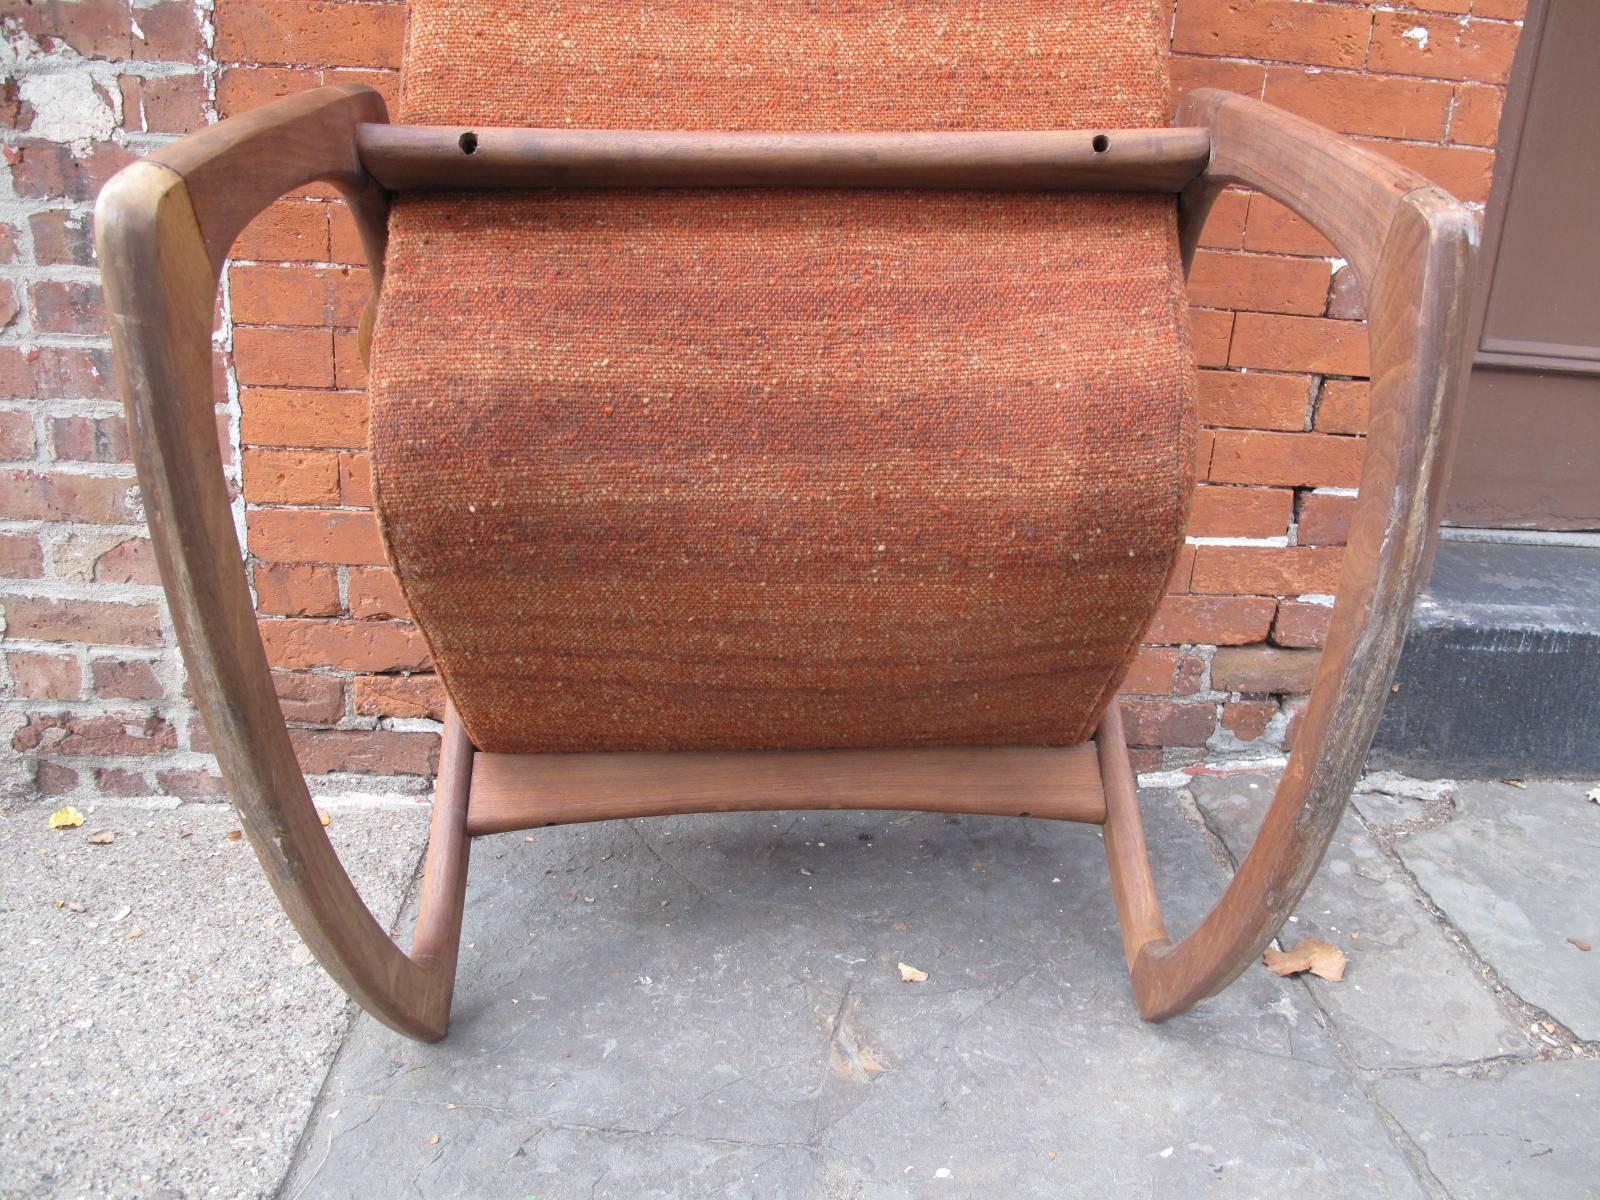 Original rust tweed upholstery. Unmarked. 